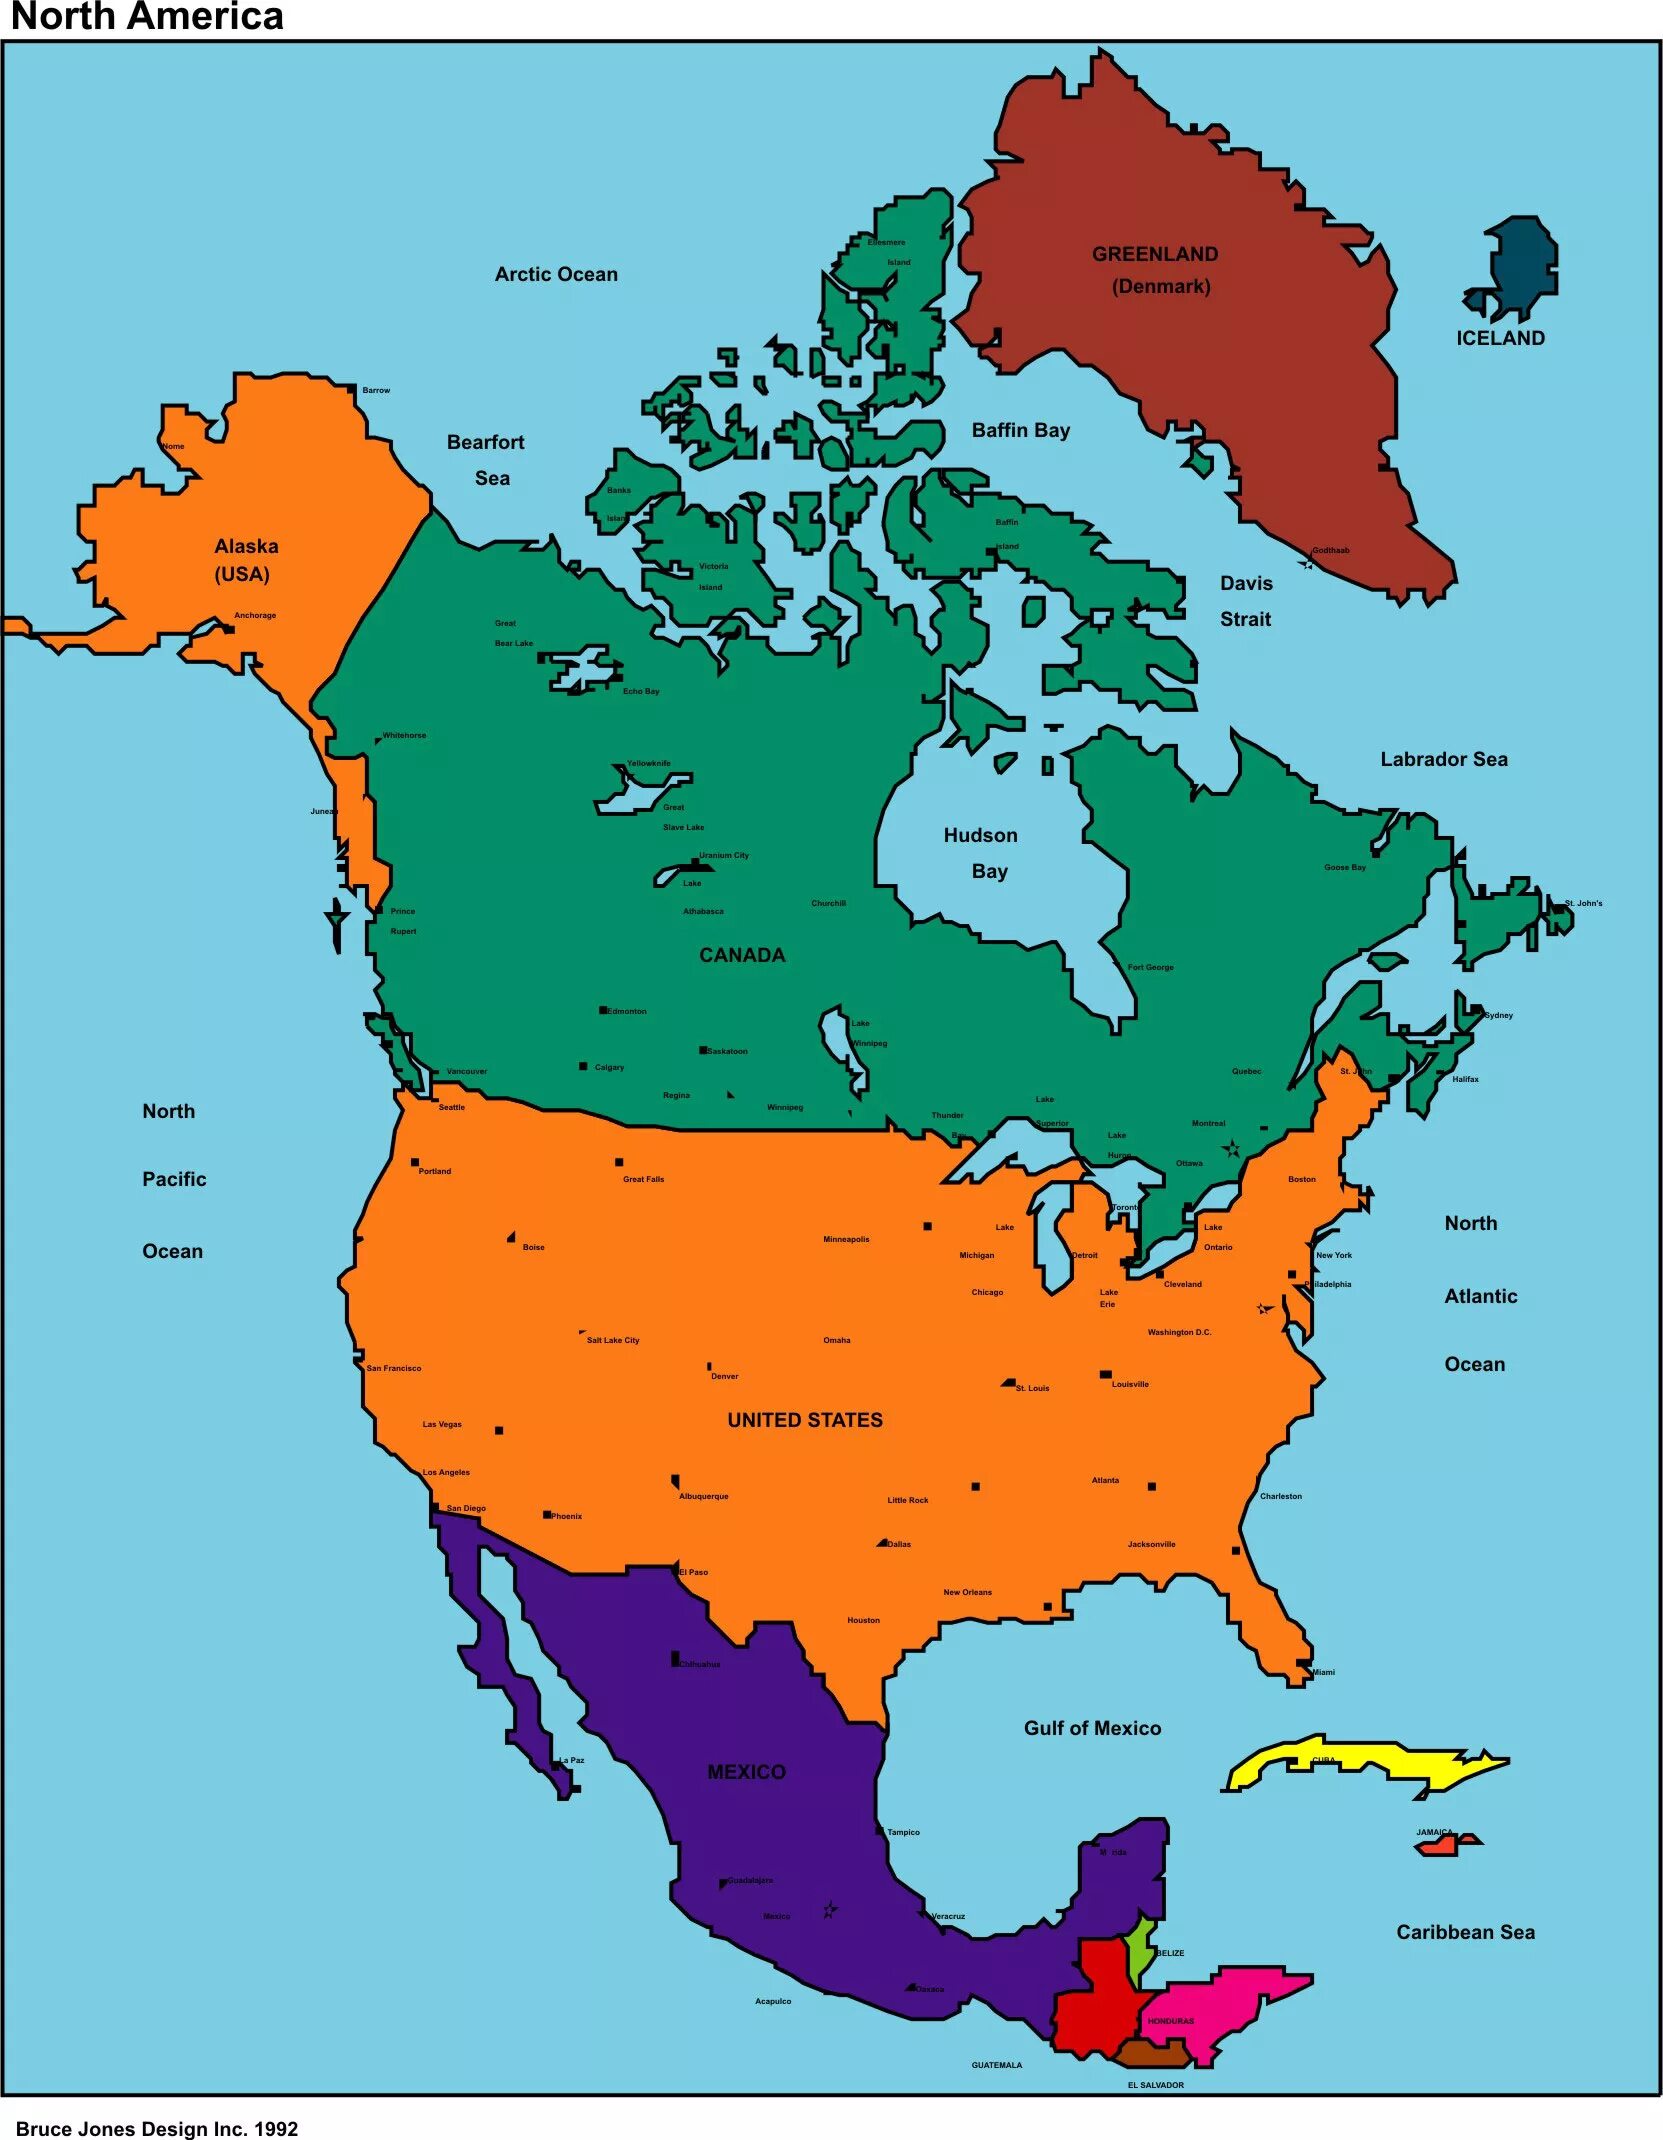 Где на территории северной америки. Государства Северной Америки на карте. Карта Северной Америки со странами. Нортх Америка.